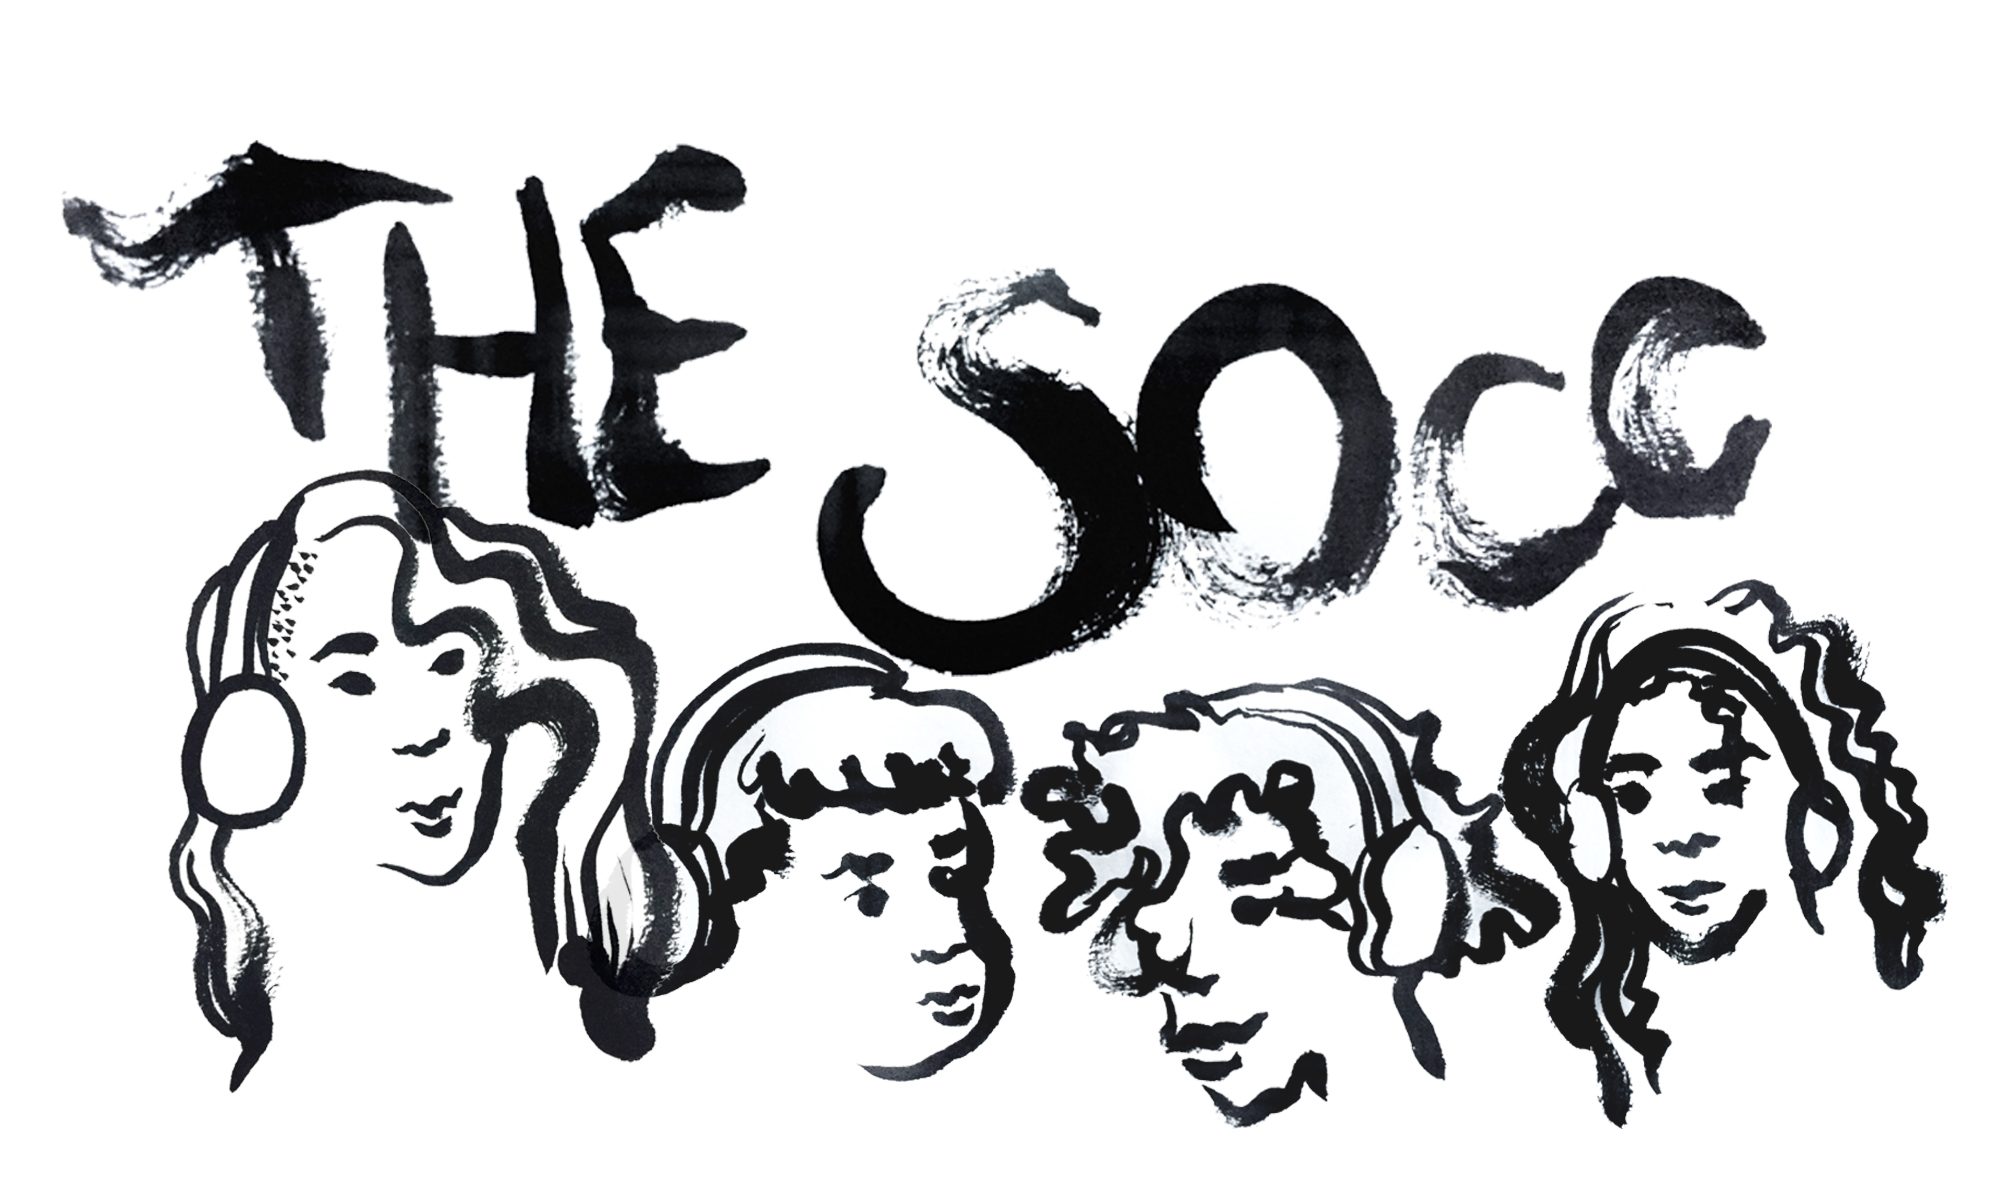 The SoCC